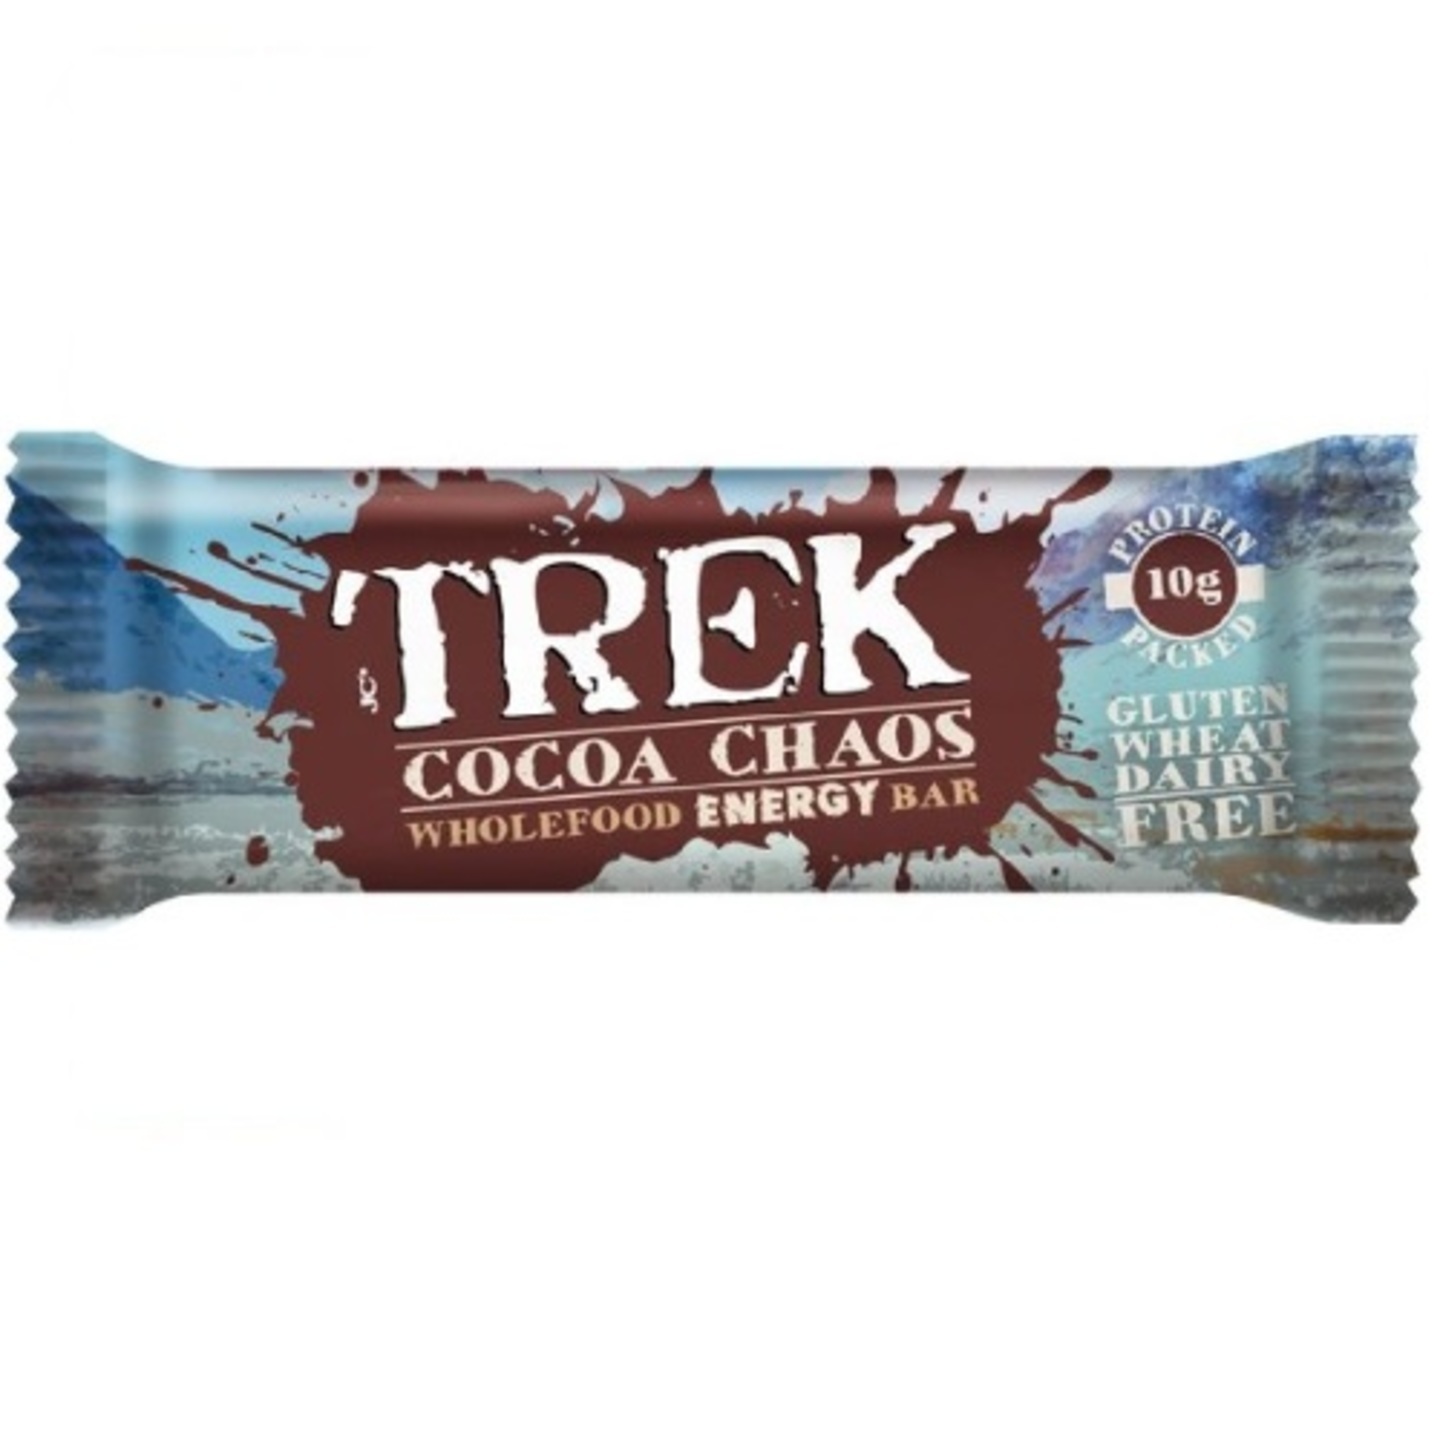 JCs Trek - Cocoa Chaos Wholefood Energy Bar